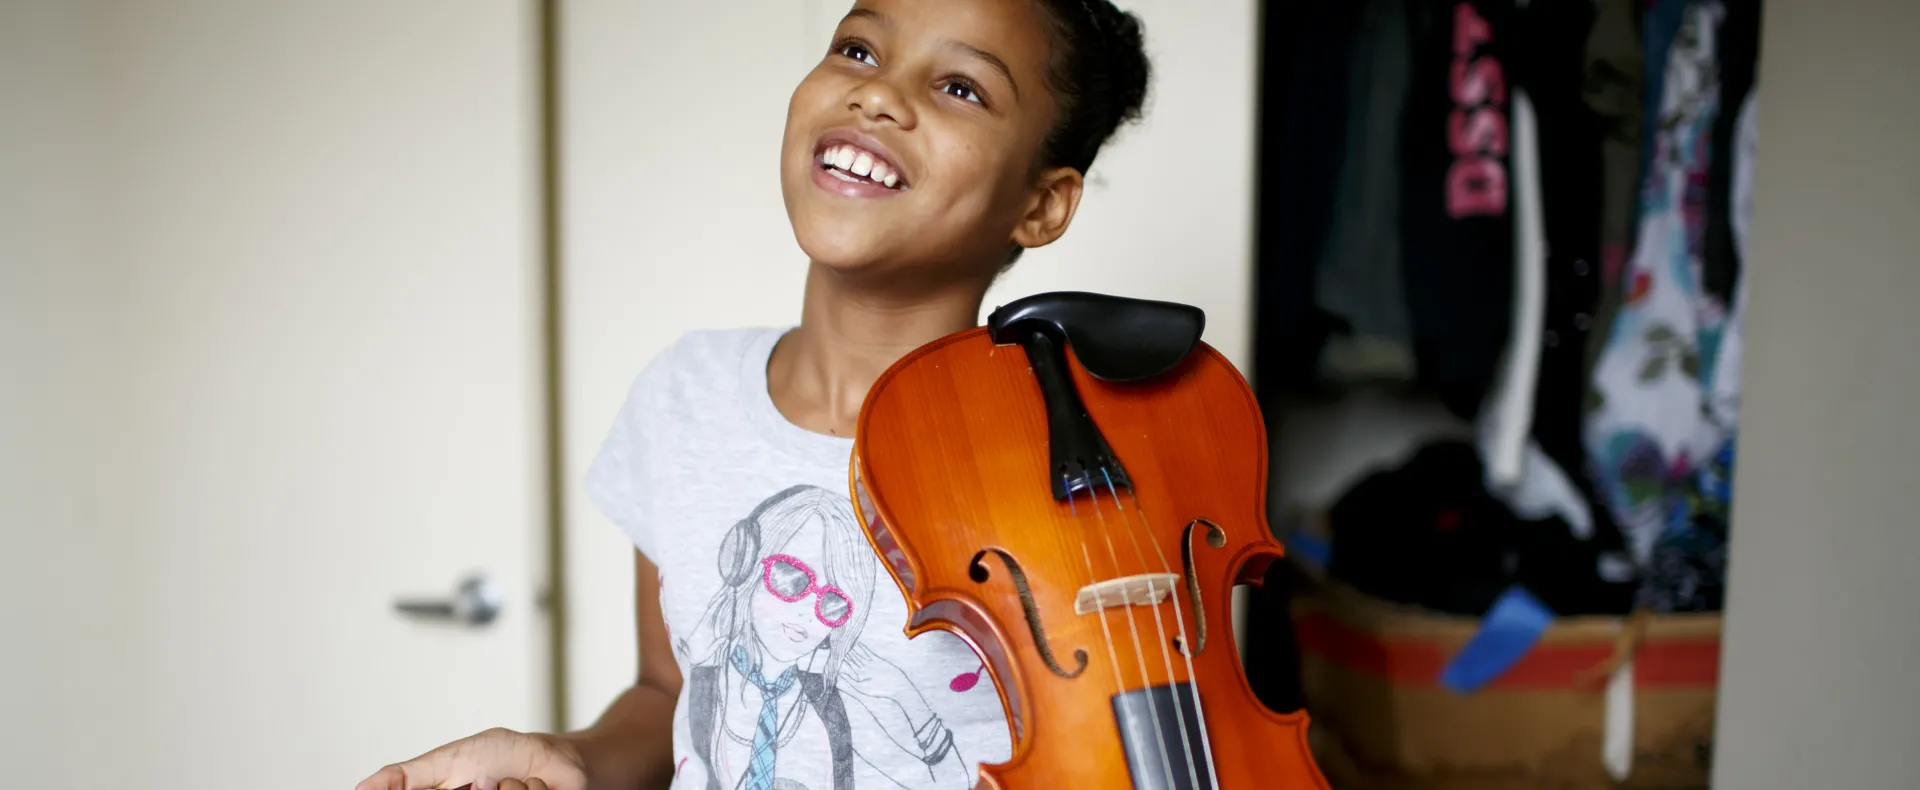 Girl holding violin